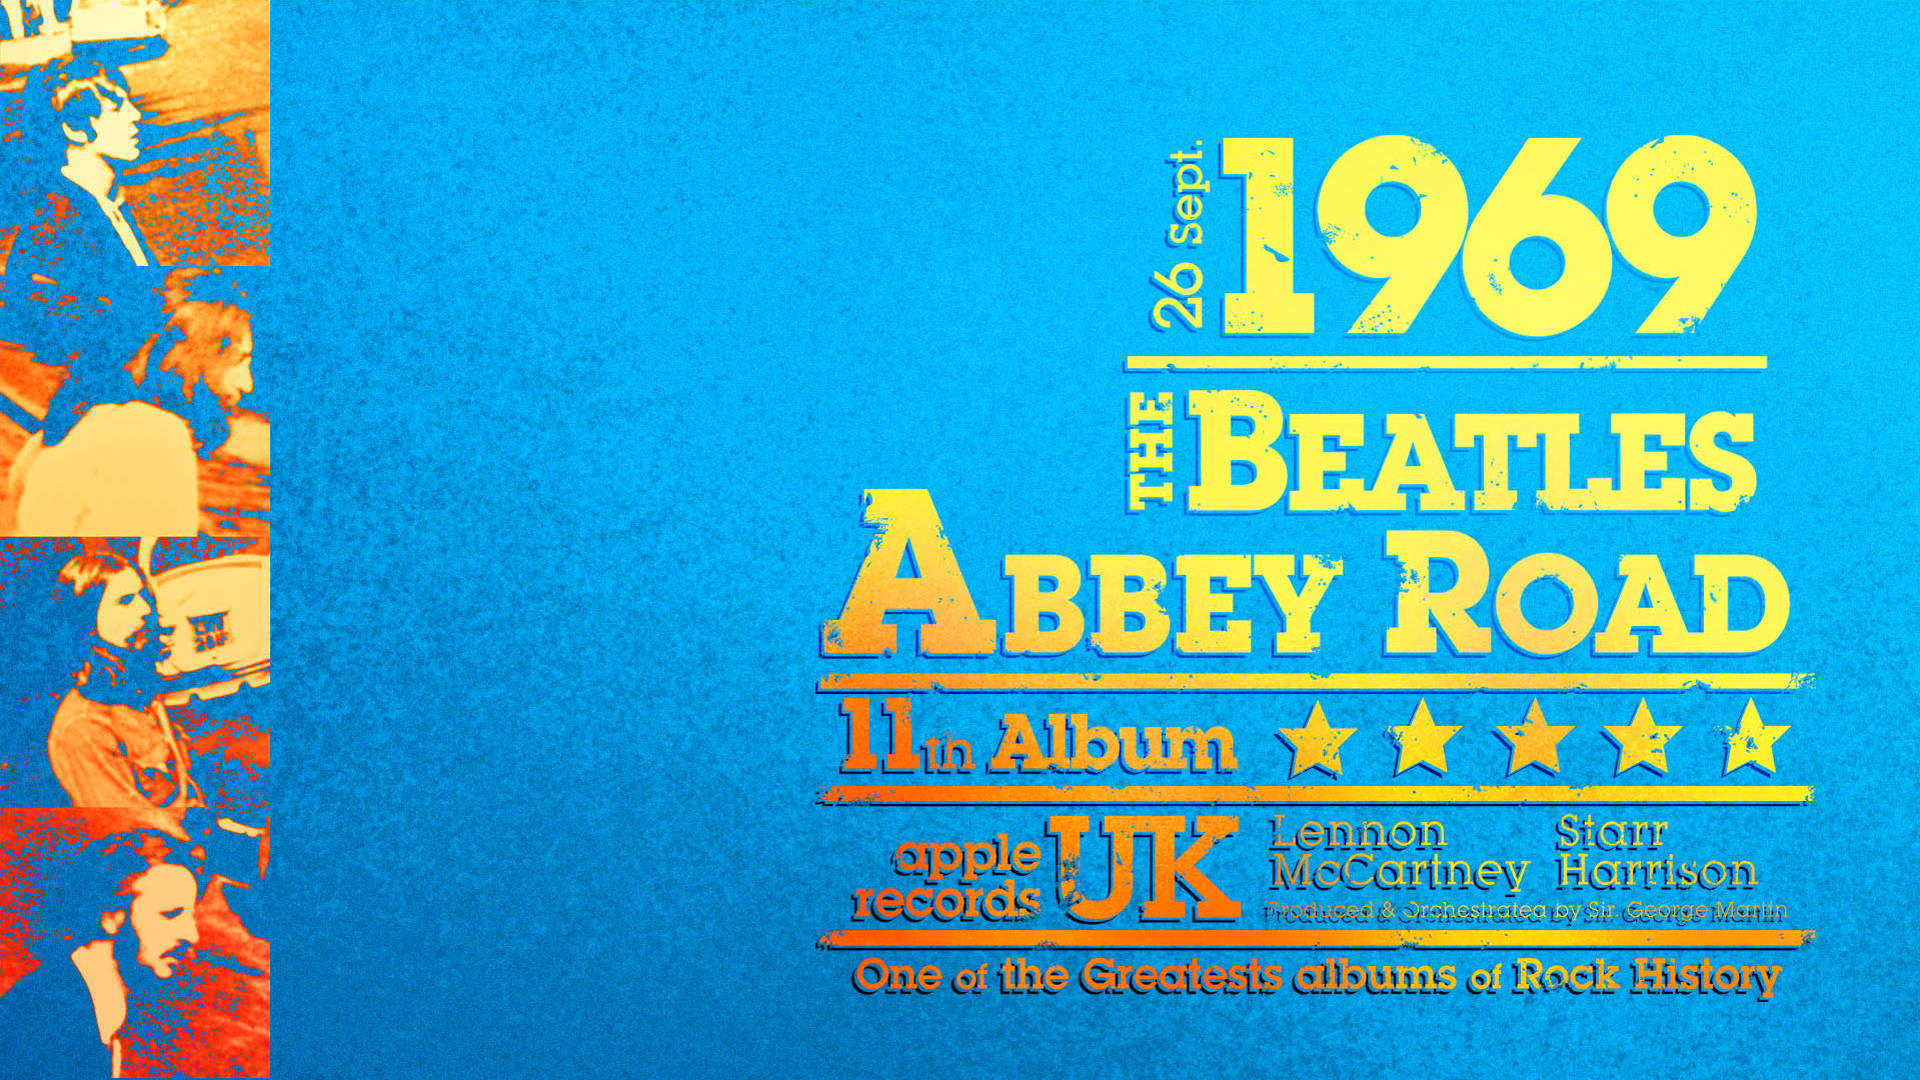 The Beatles Abbey Road Album Wallpaper